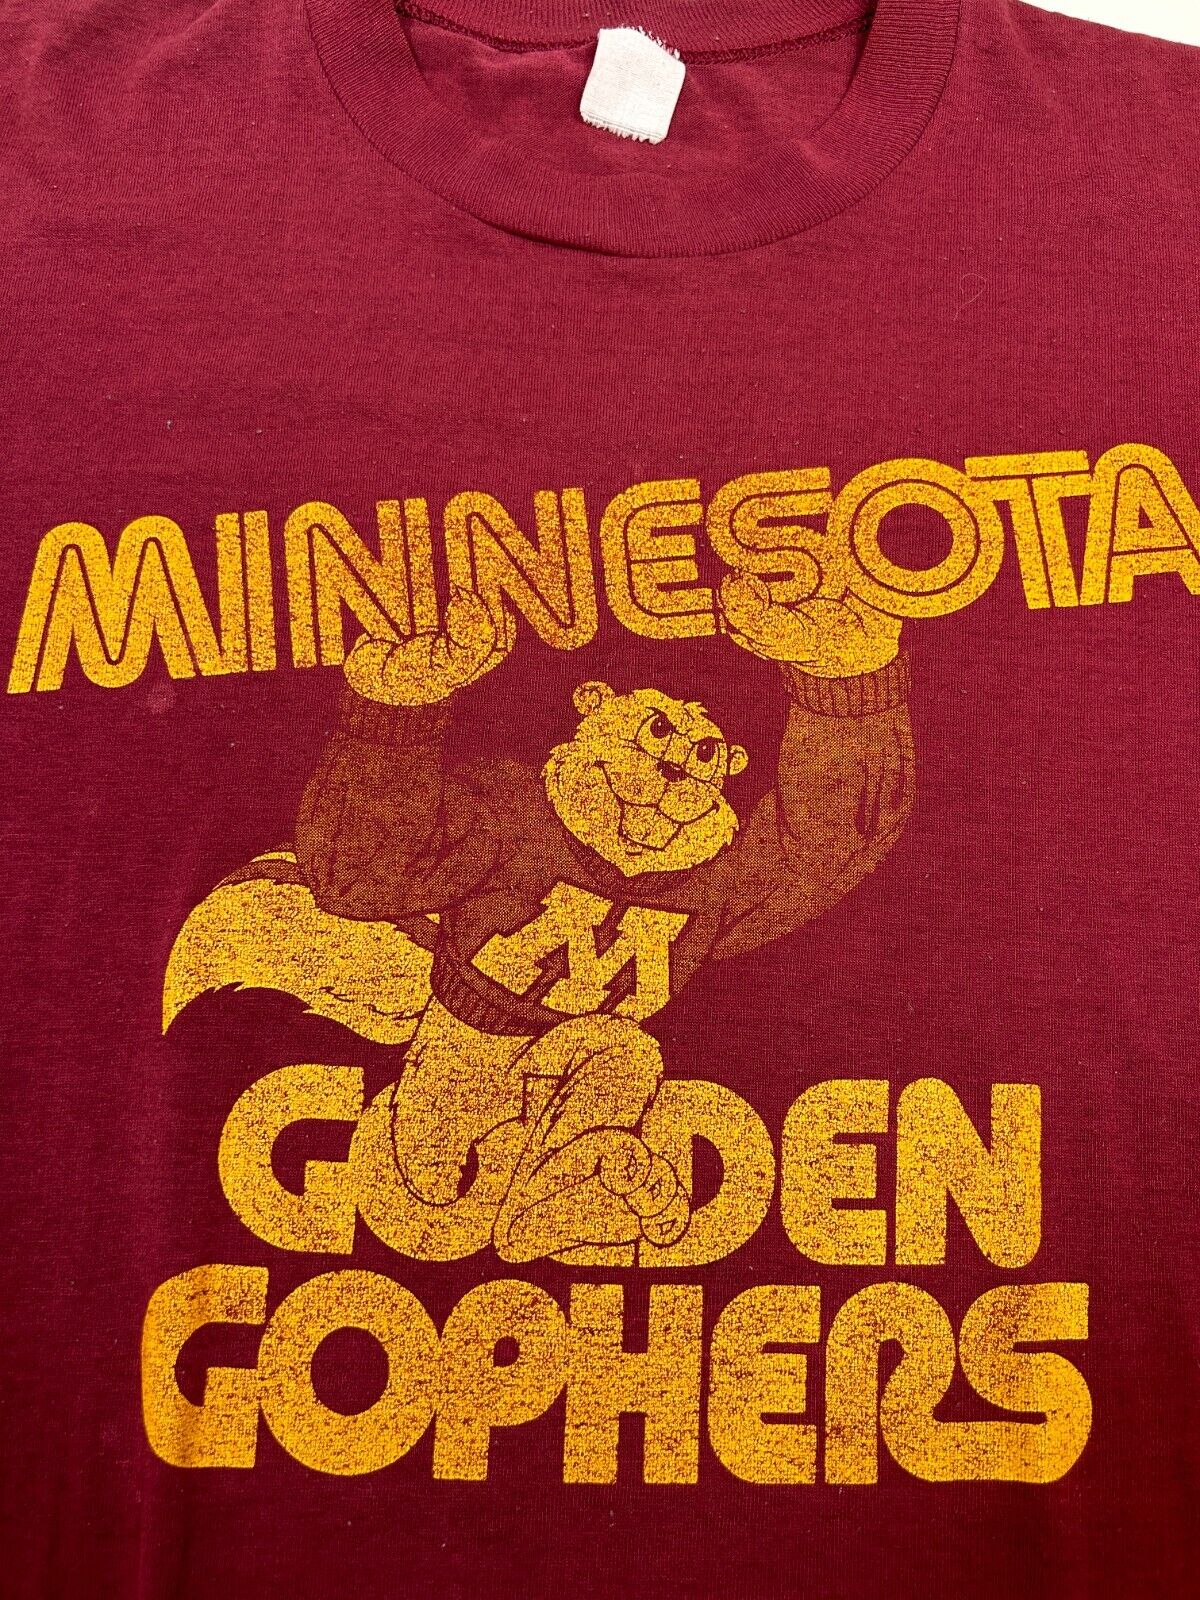 Vintage 80s Minnesota Golden Gophers Big Graphic Collegiate T-Shirt Size Large